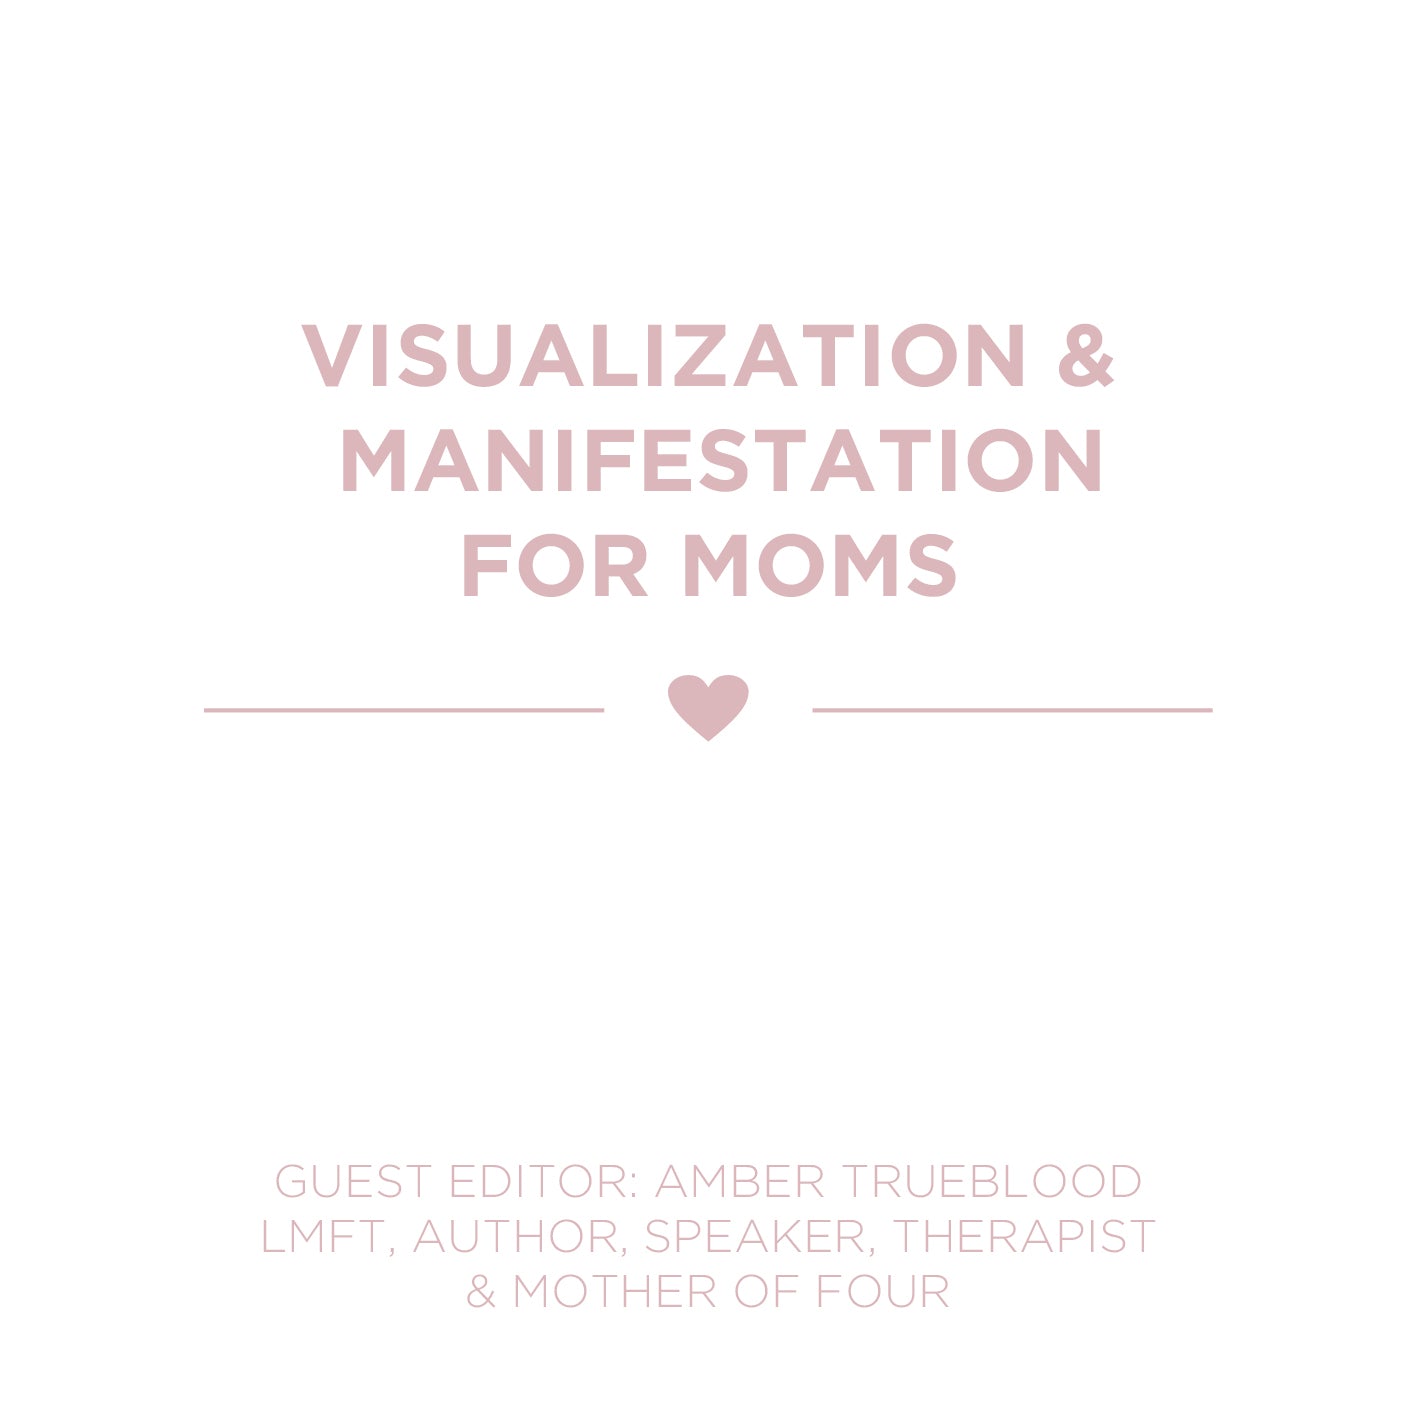 VISUALIZATION & MANIFESTATION FOR MOMS